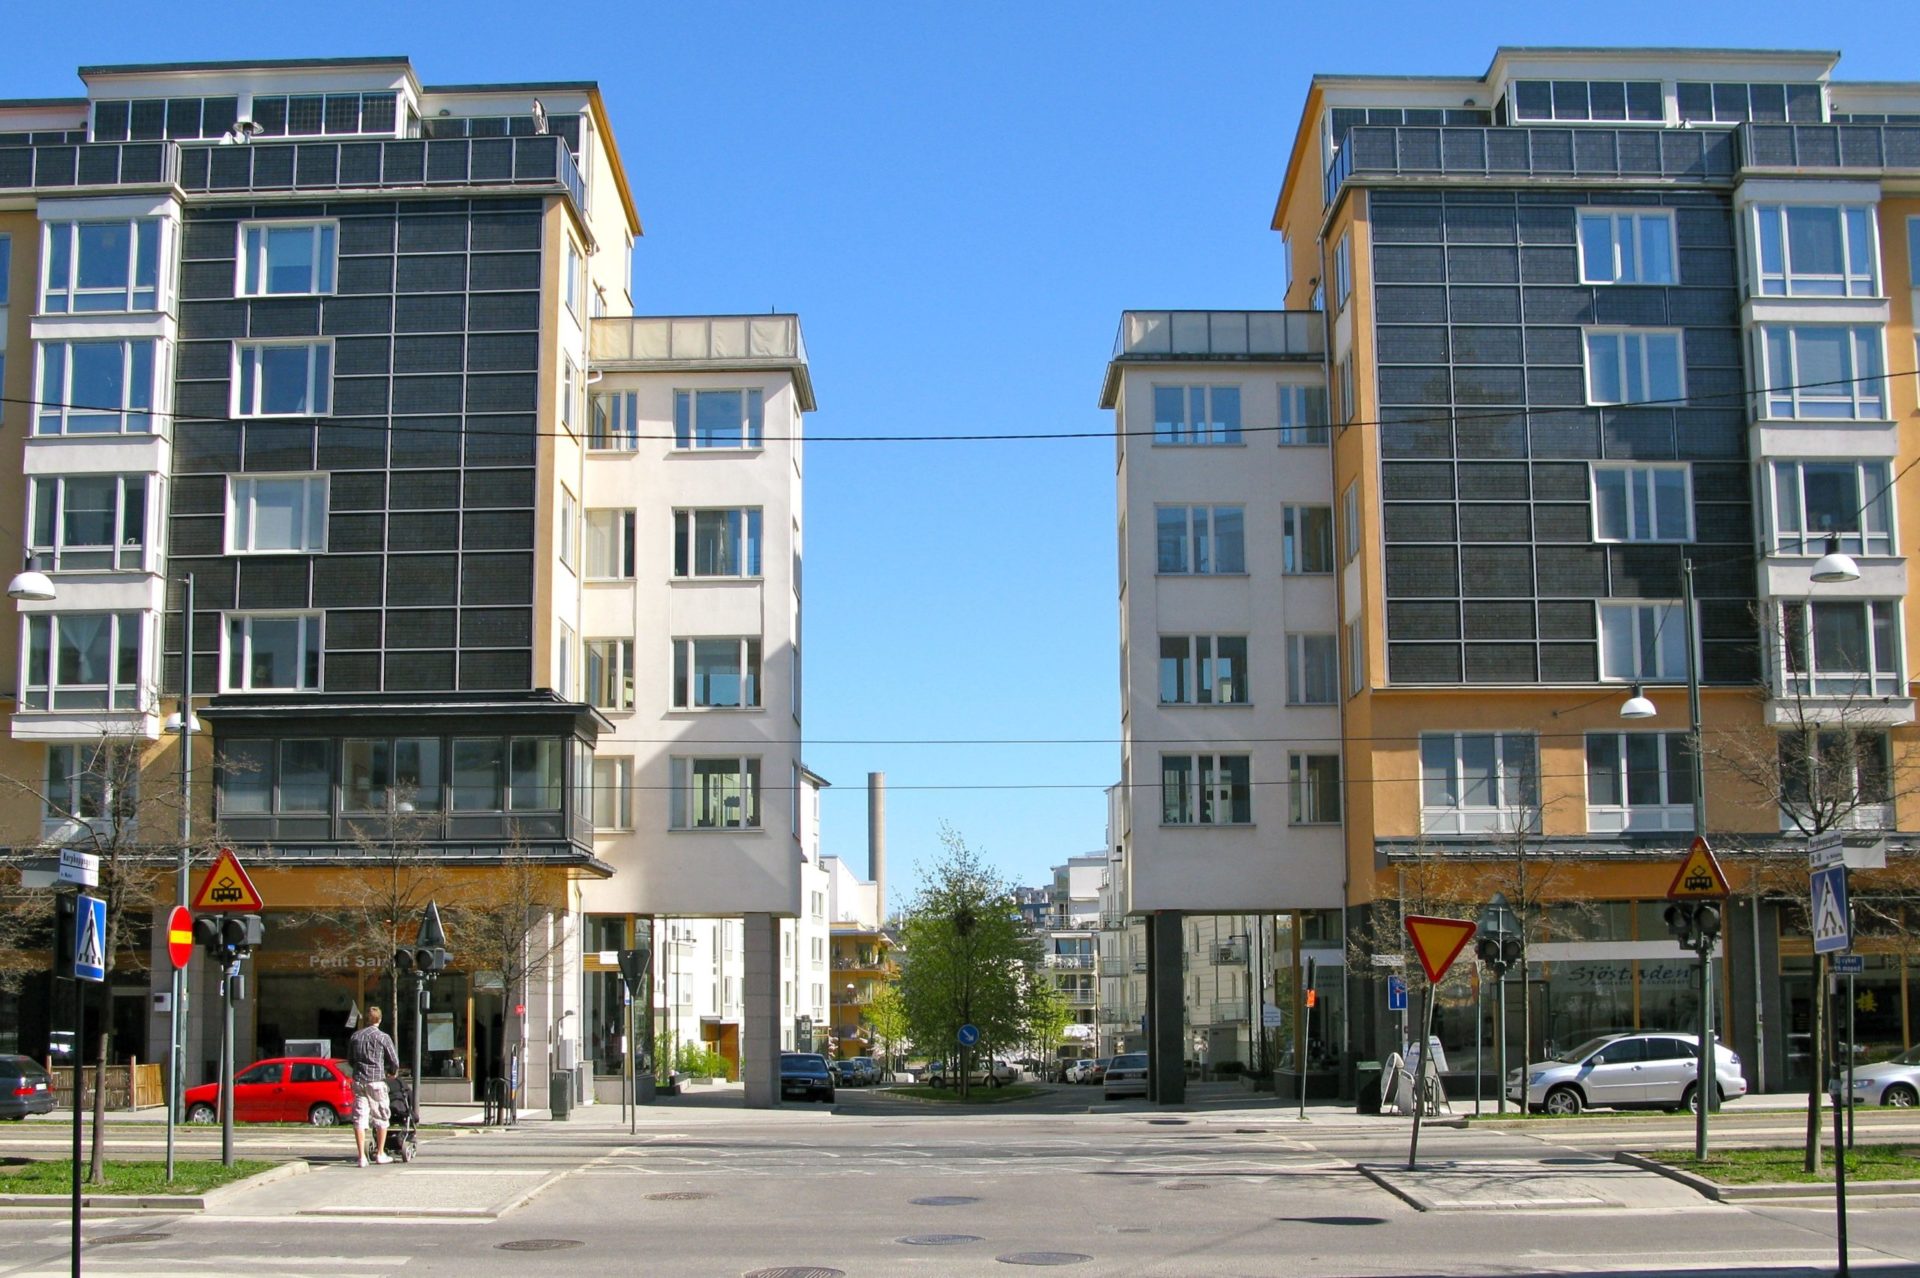 Urban BIPV retrofit potential of facades